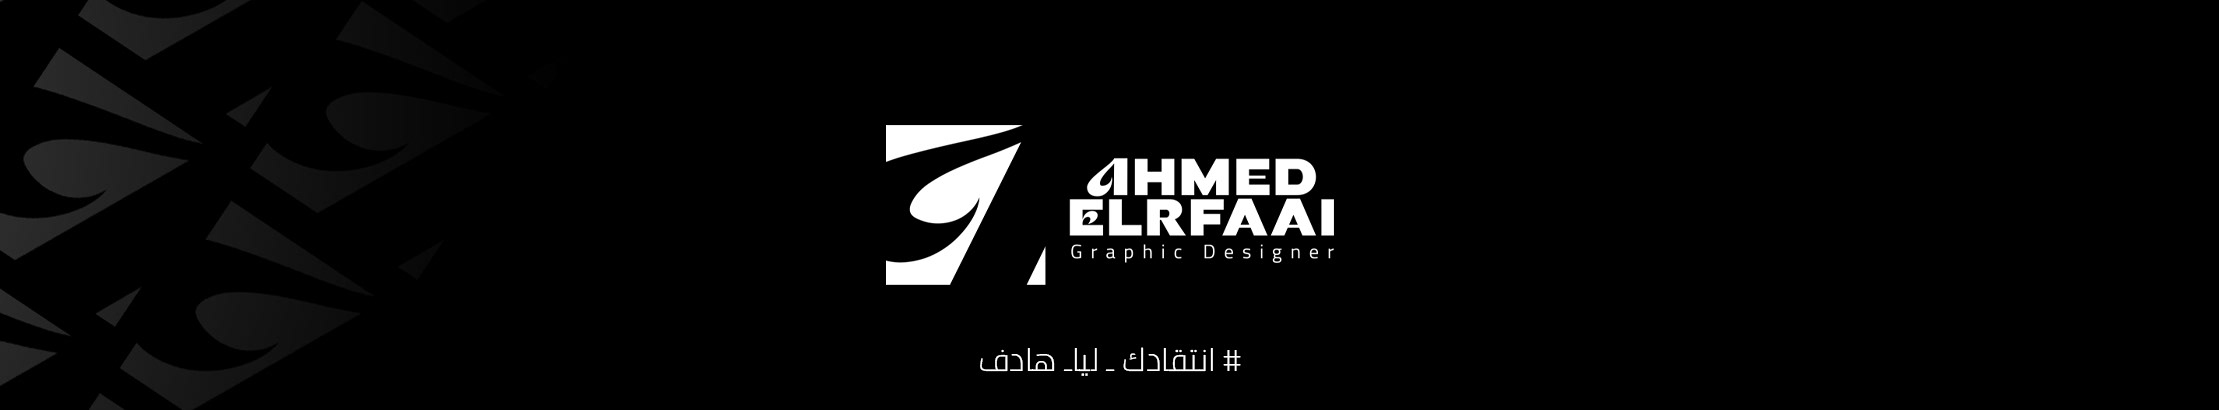 Ahmed elrfaai's profile banner